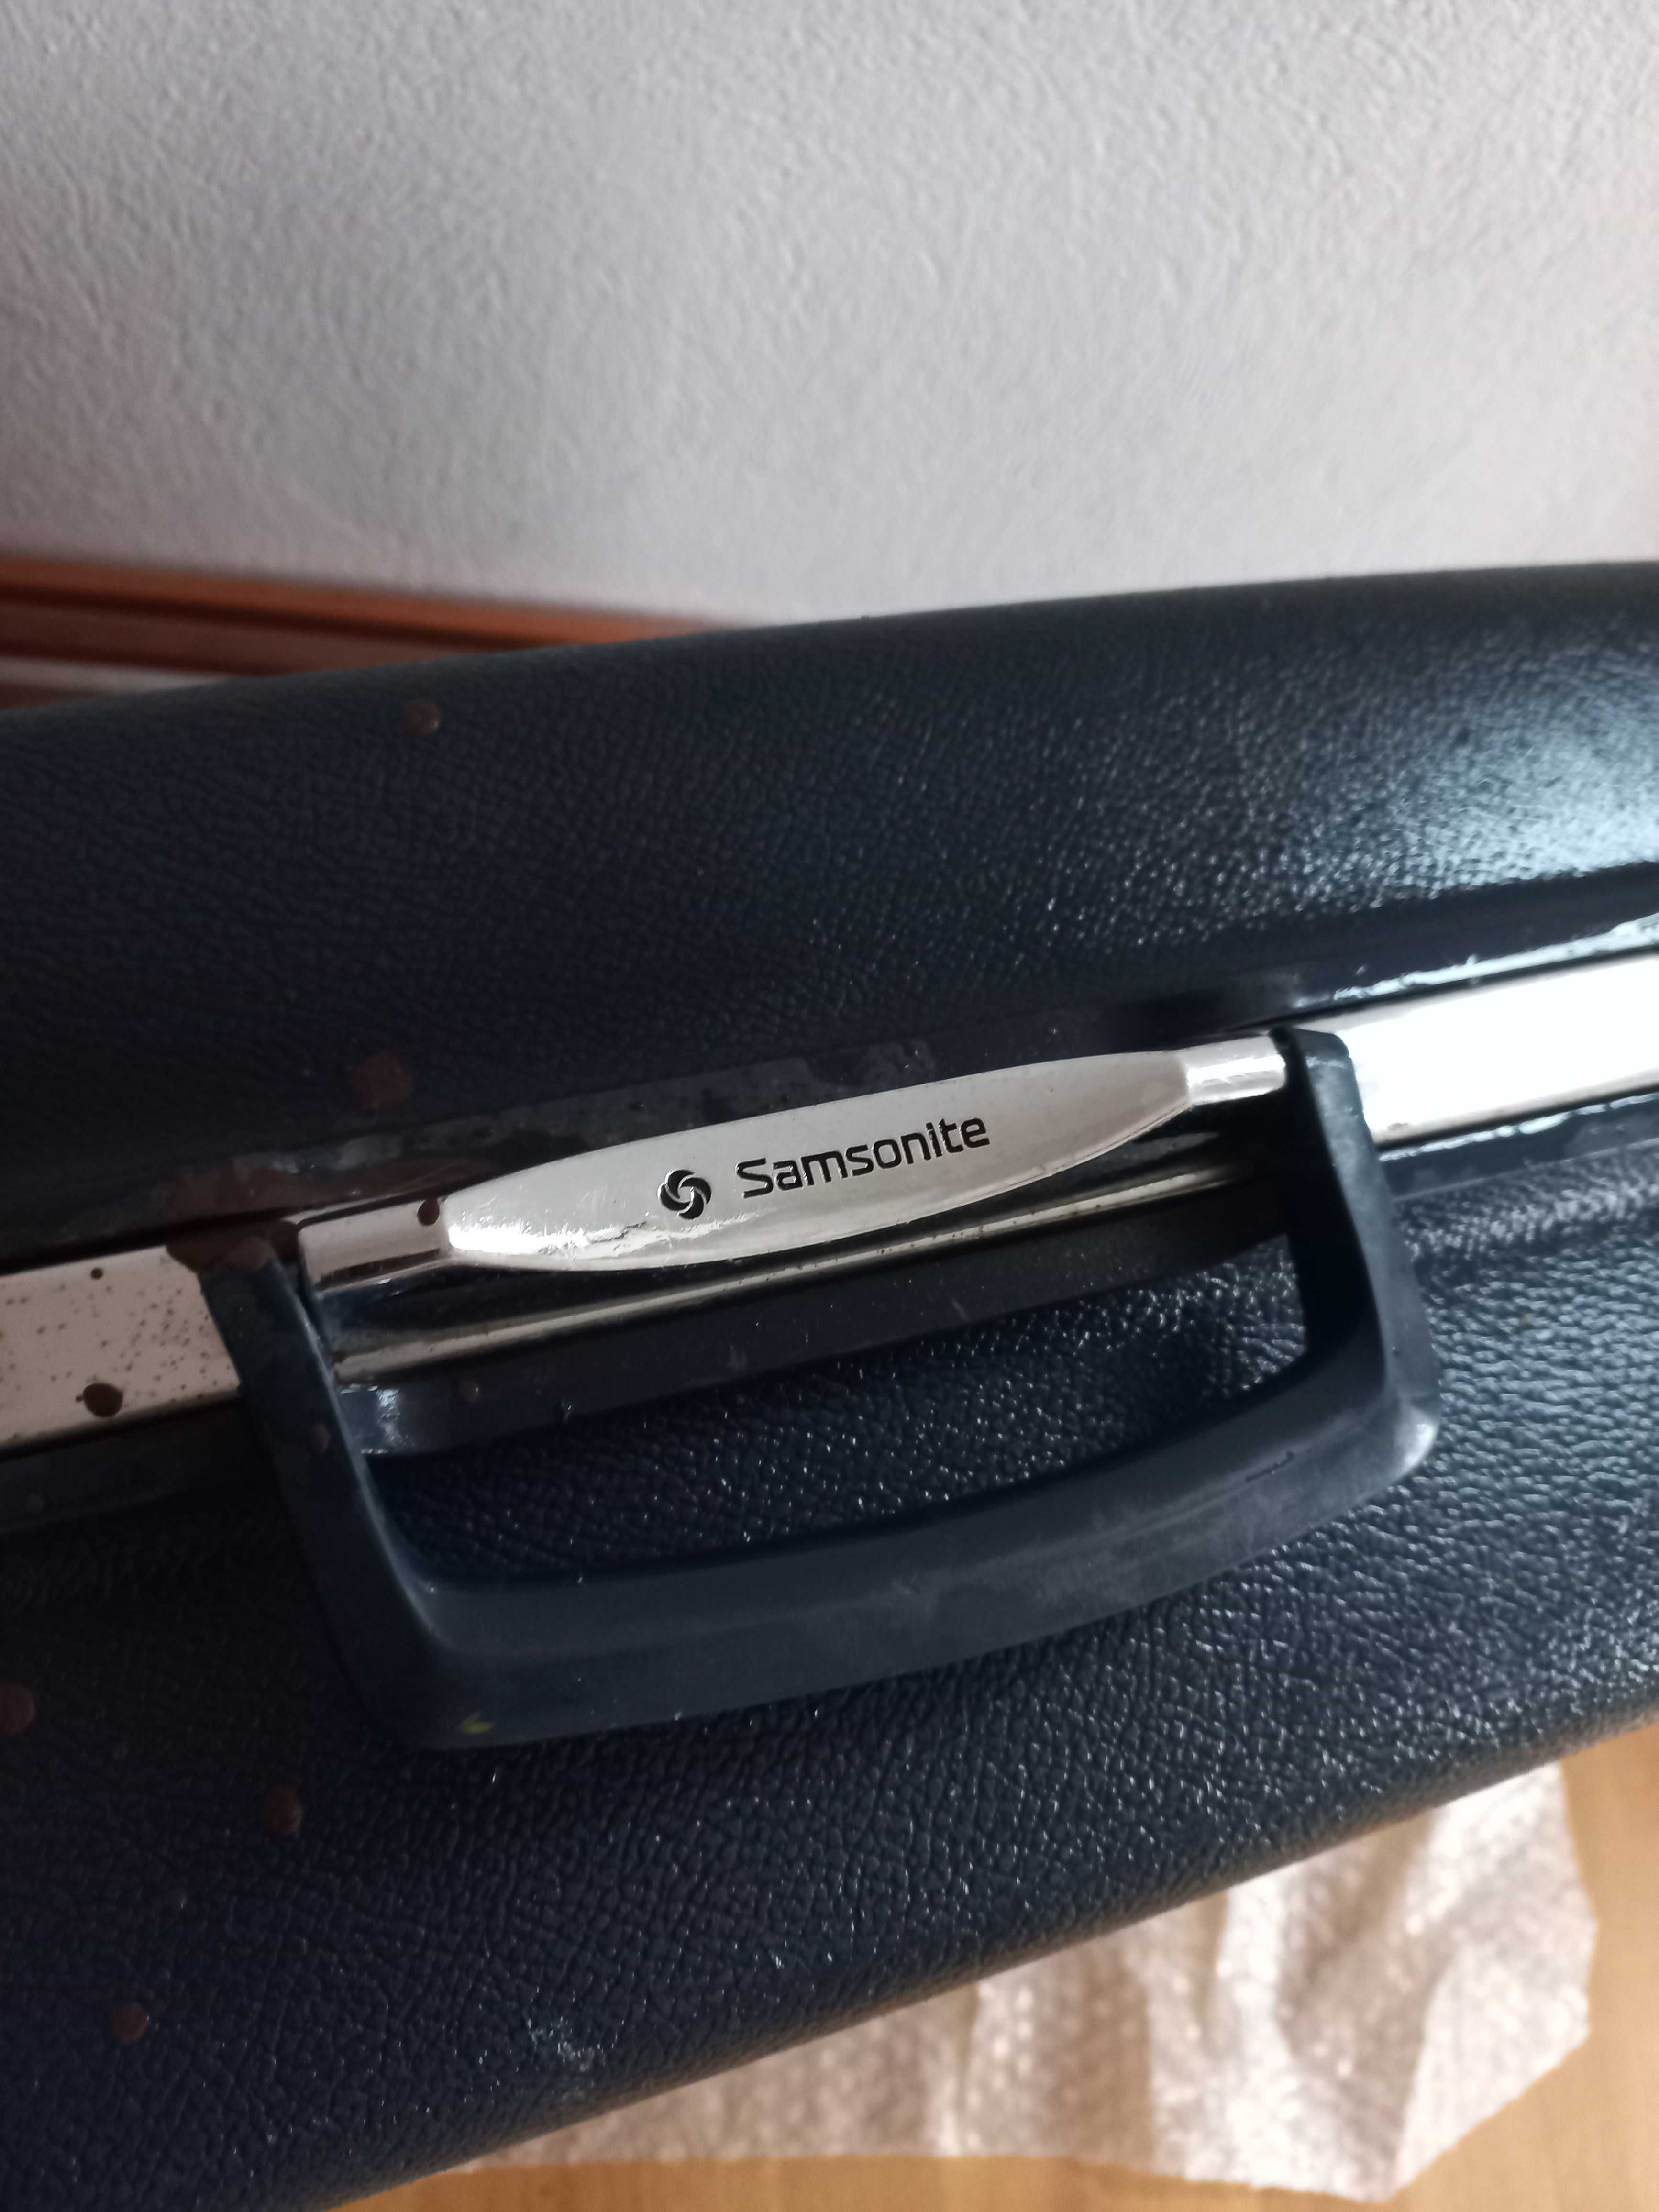 geanta geamantan valiza Samsomite import germany plastic dur haine